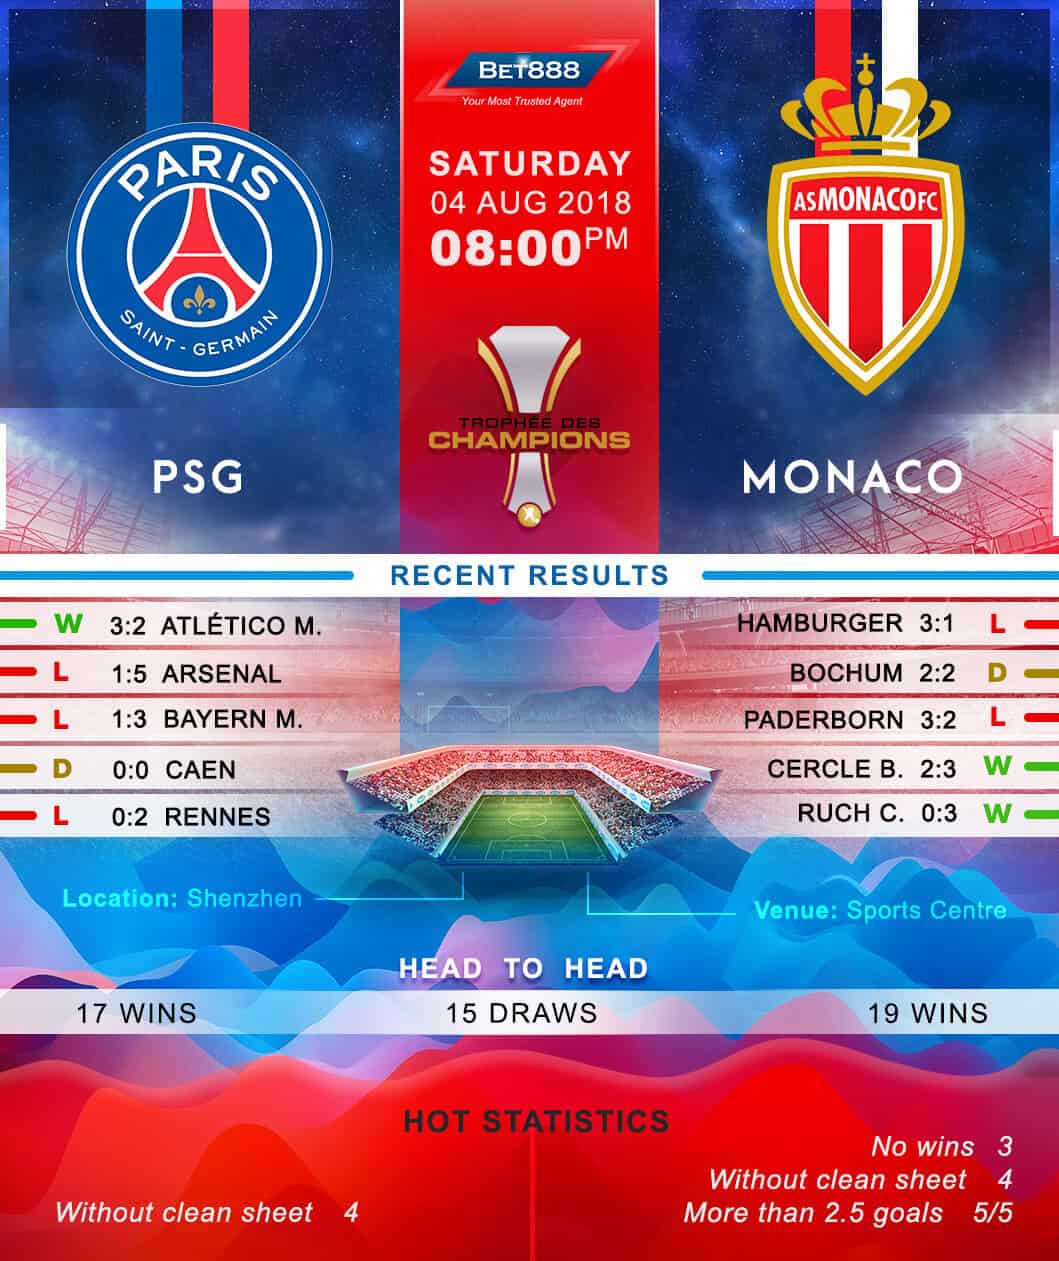 Paris Saint-Germain vs AS Monaco 04/08/18